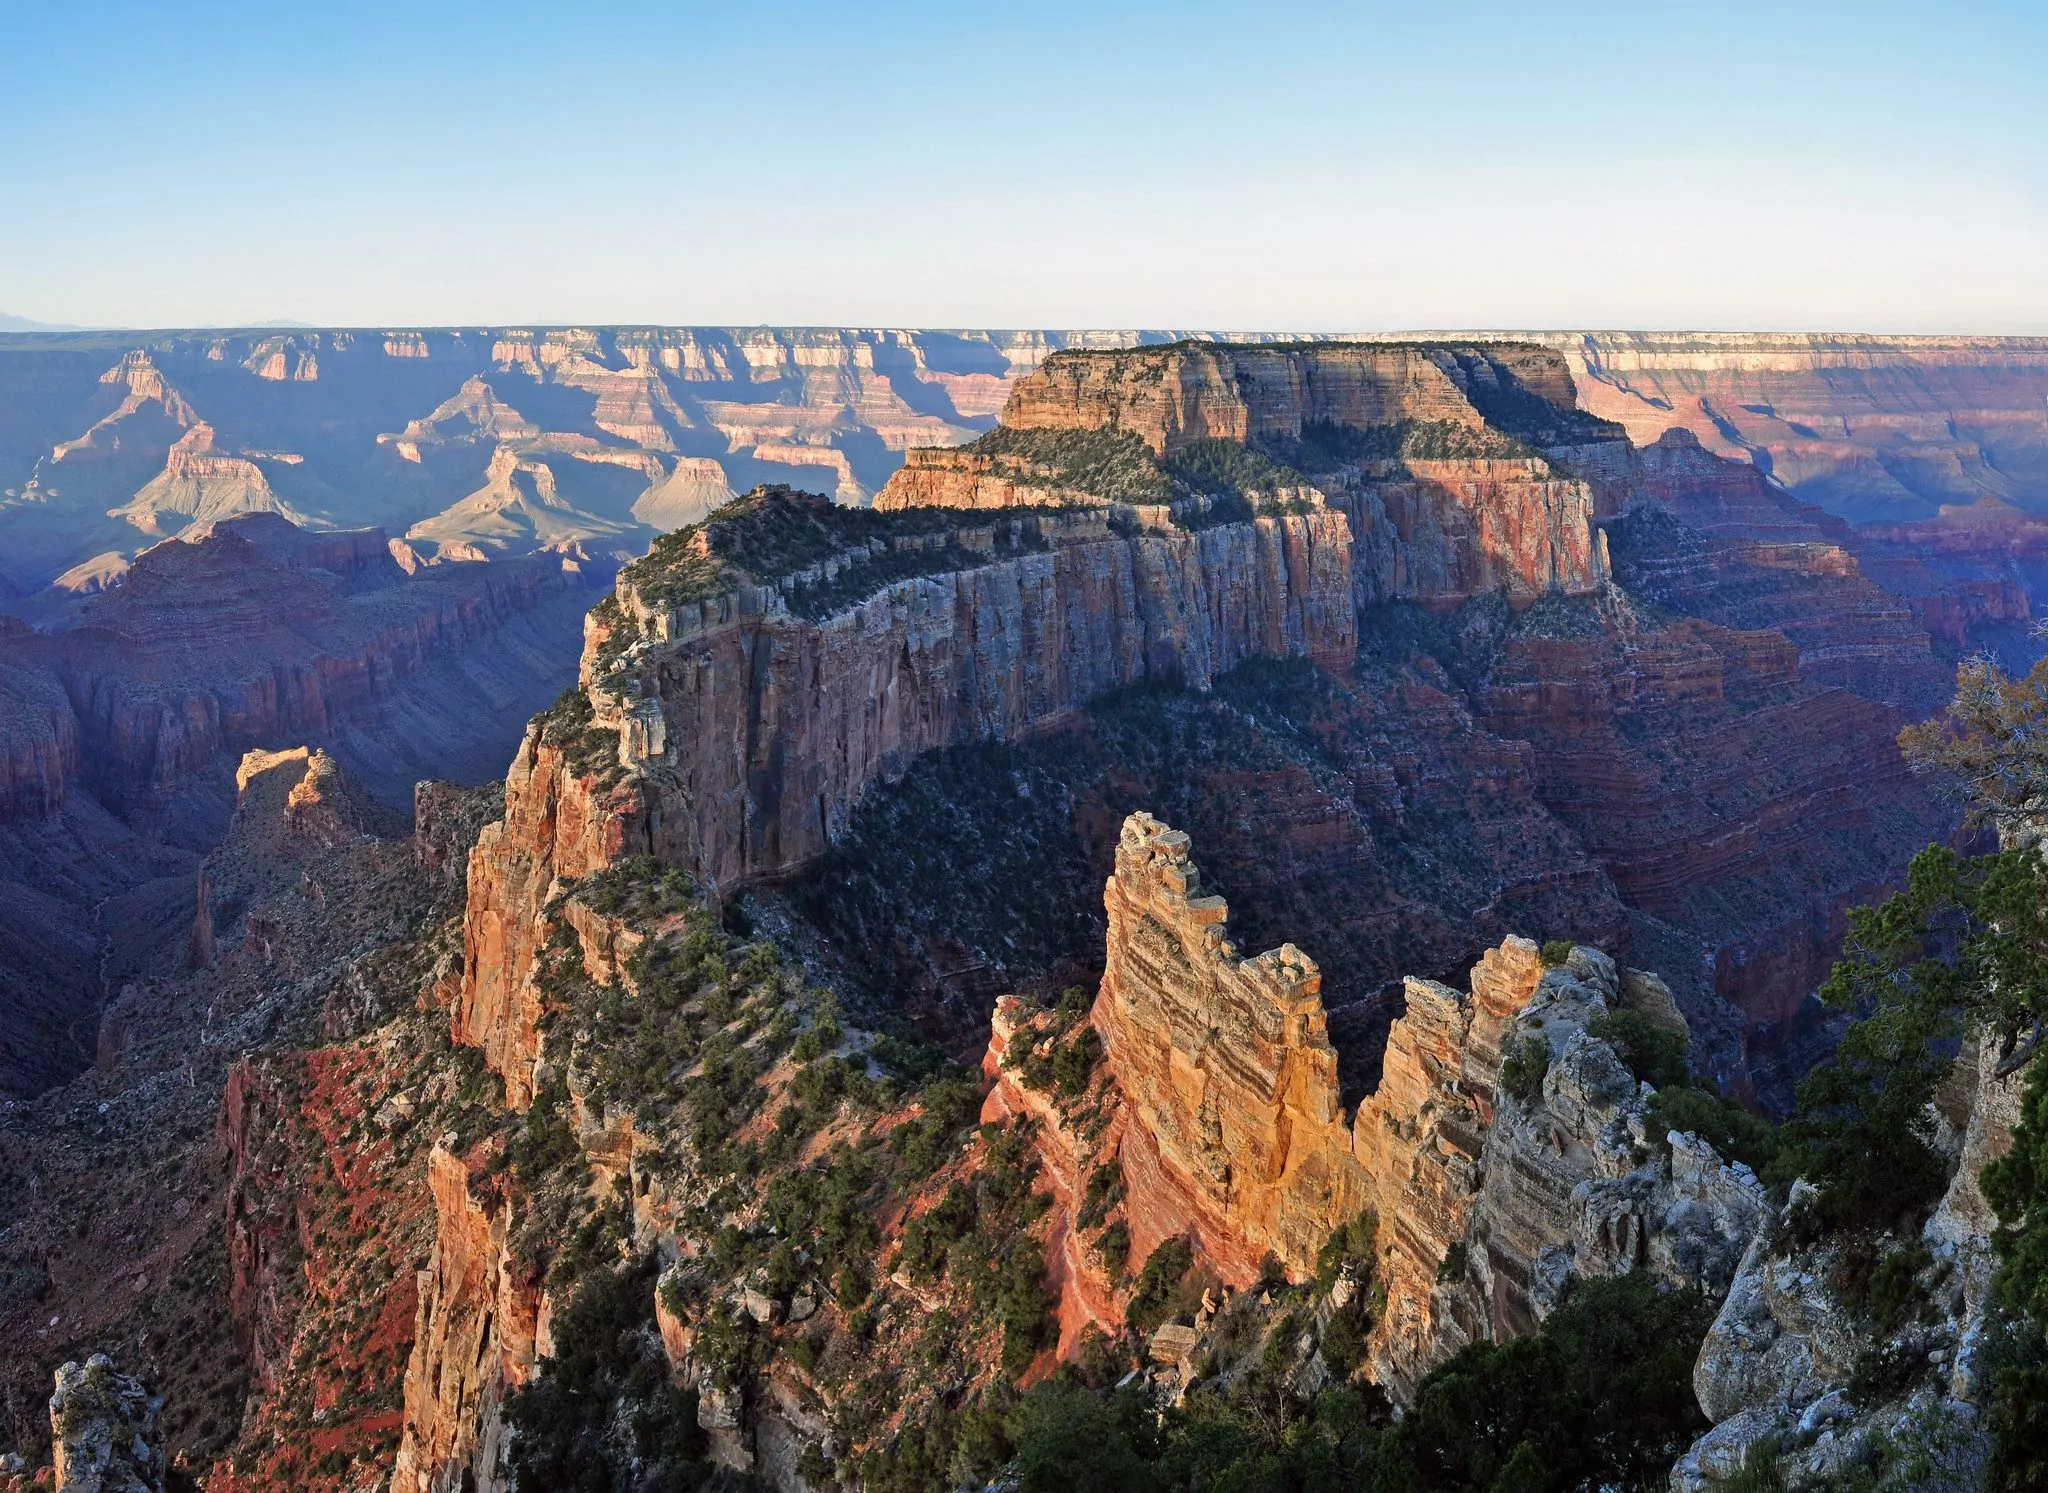 Grand Canyon National Park Hiking Gear Play Set